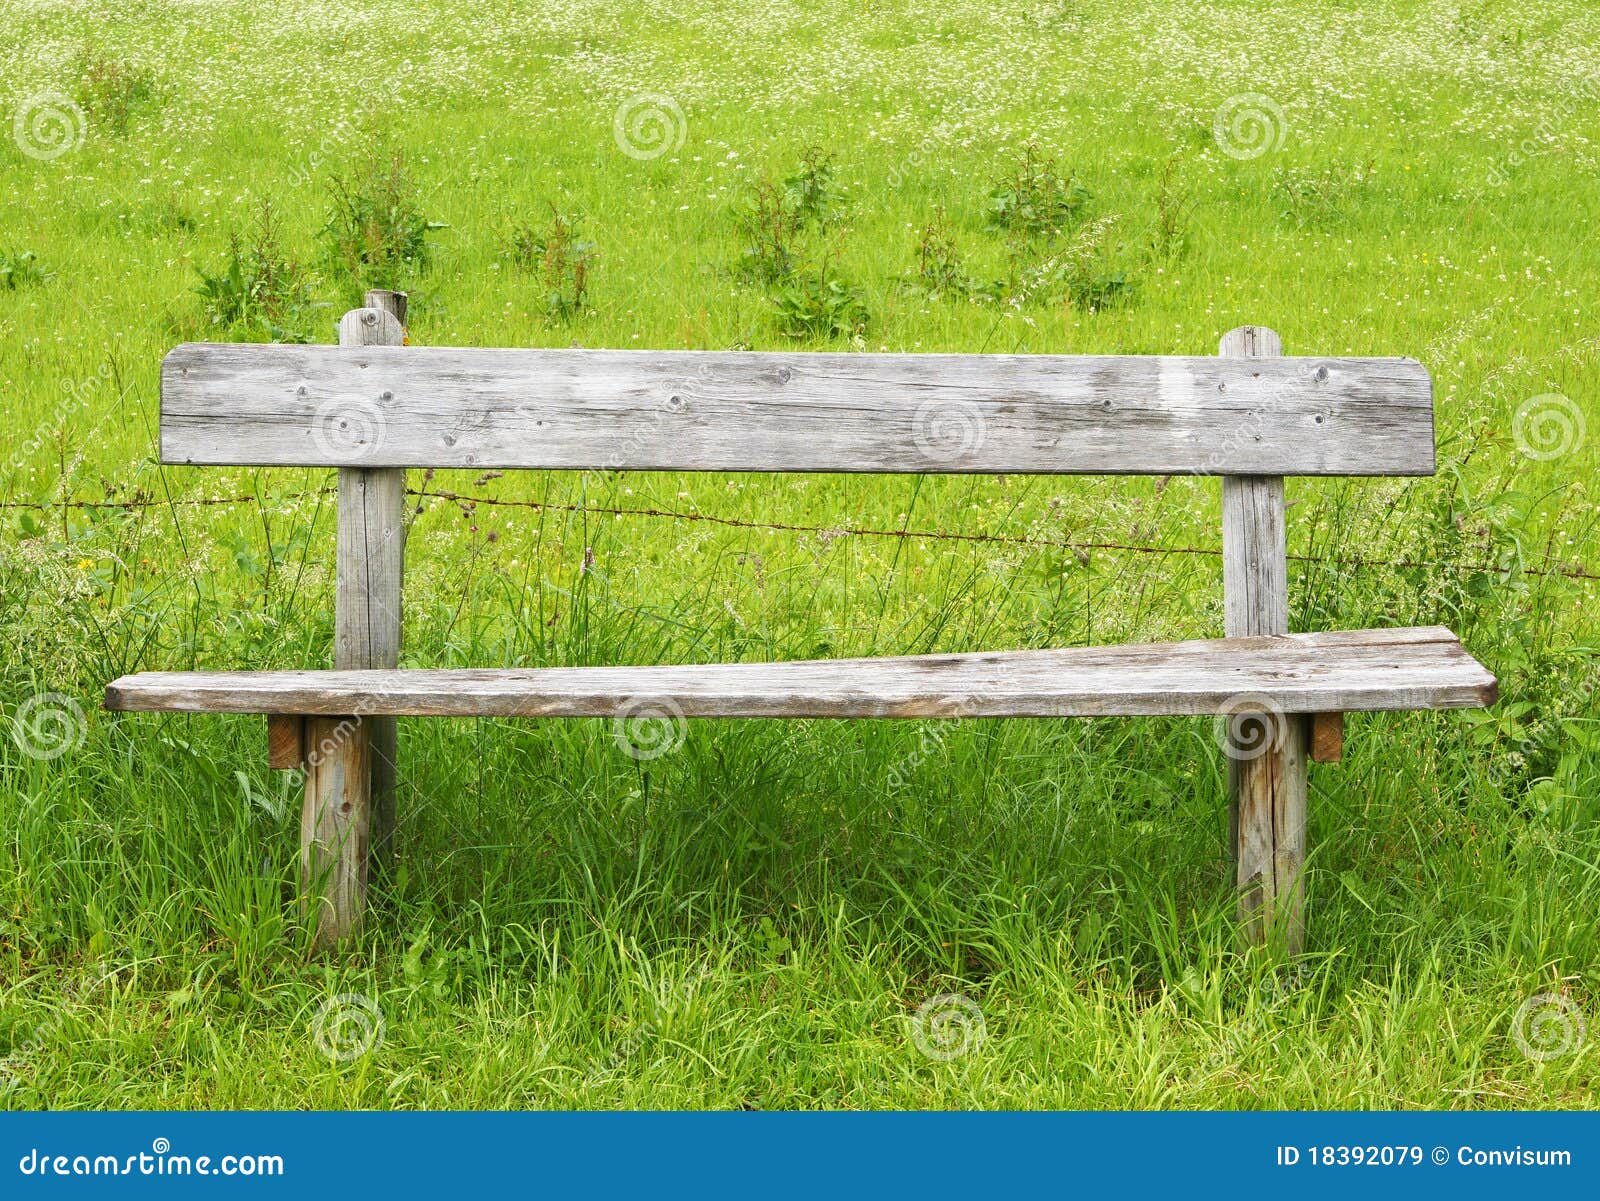 cast iron wood slatted bench garden shade.cr2 stock image